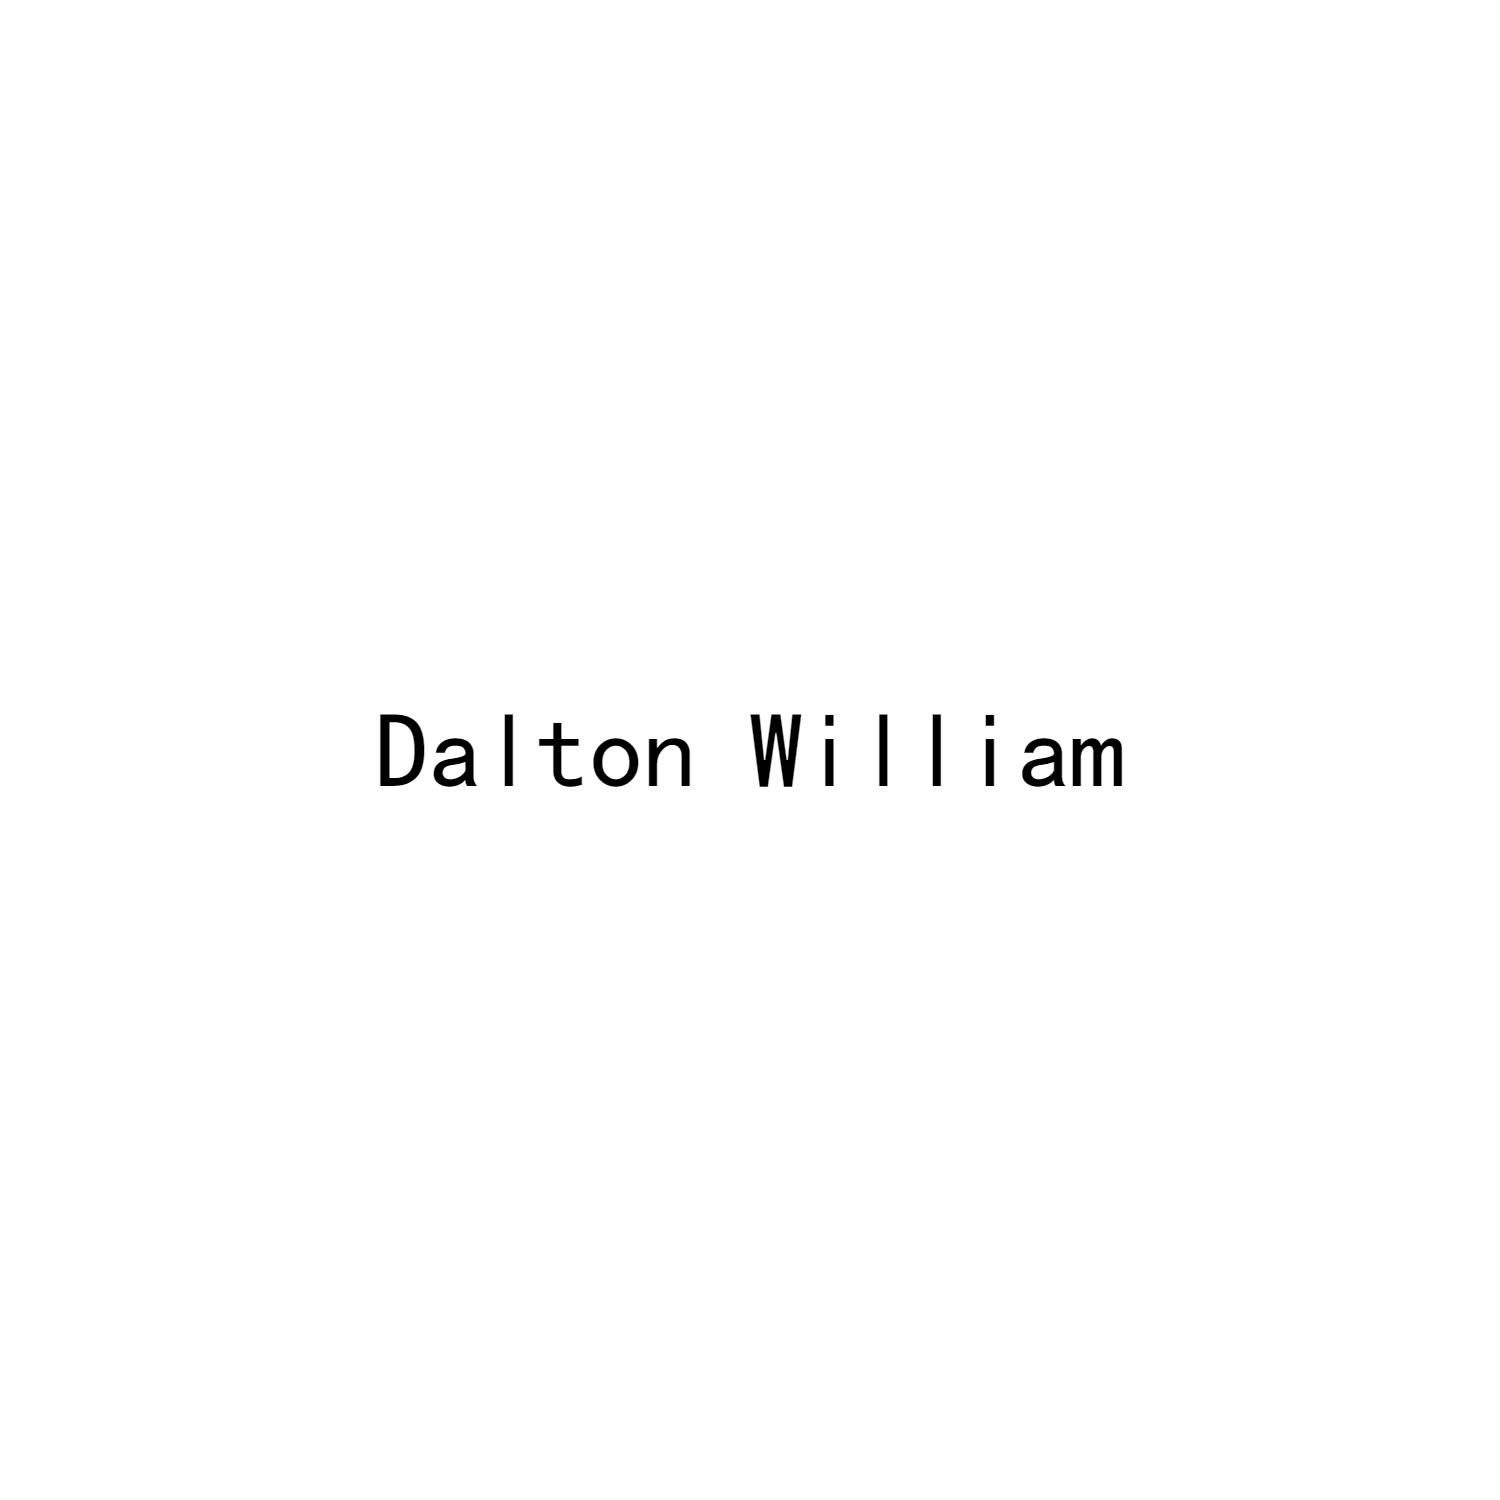 DALTON WILLIAM商标转让